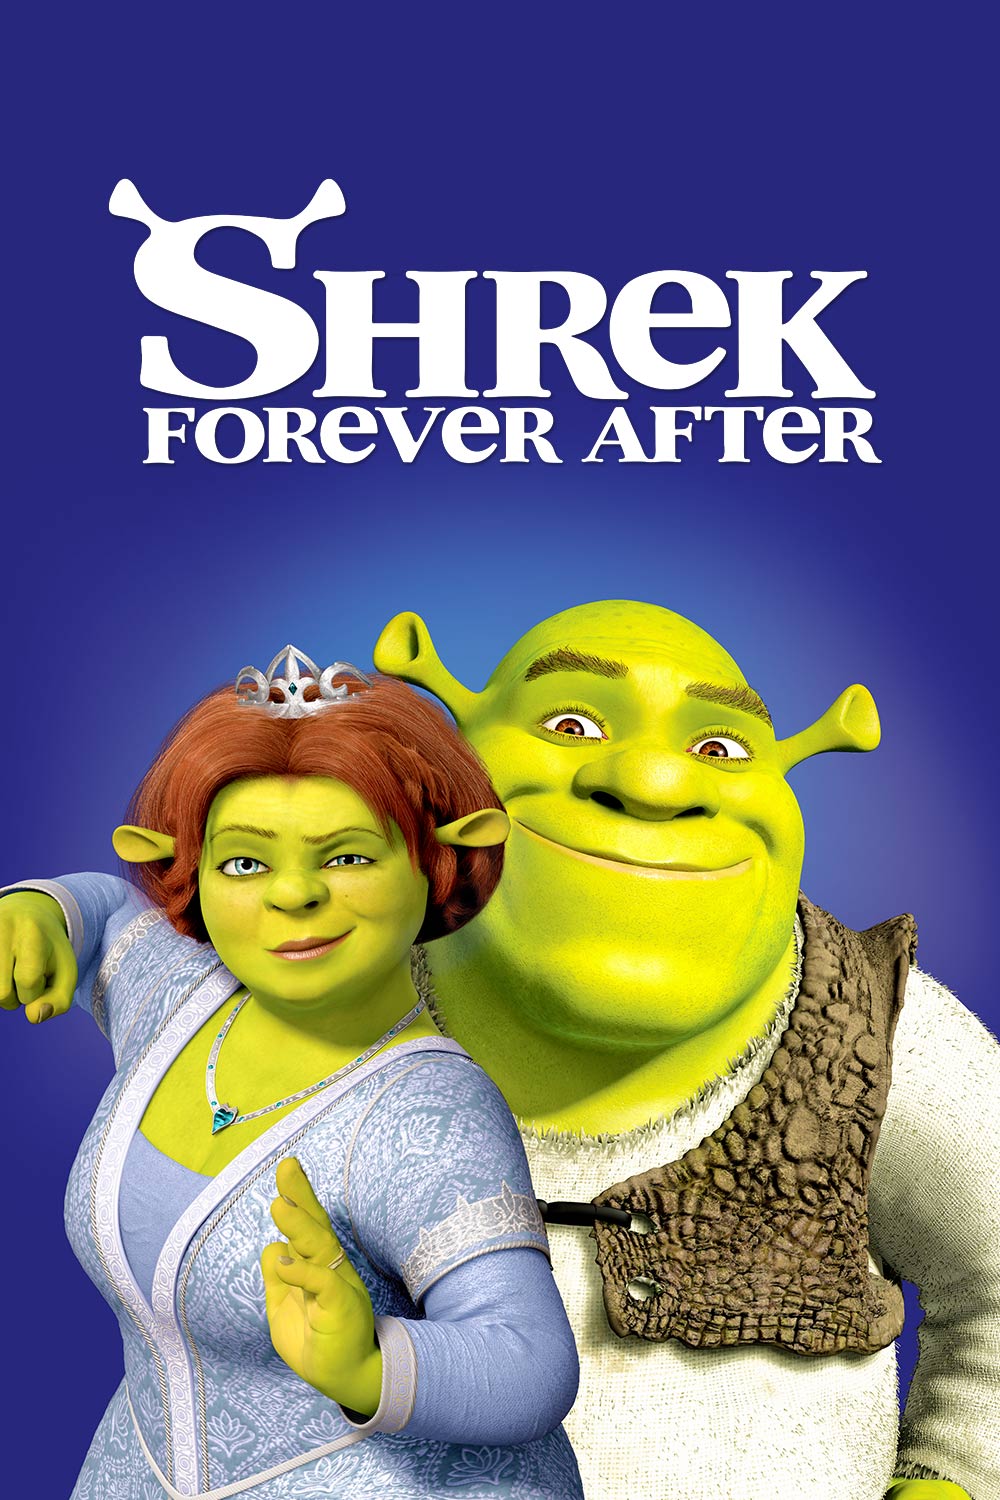 Watch Shrek 2 in Spanish with me #shrek2 #fall2022 #movies | TikTok